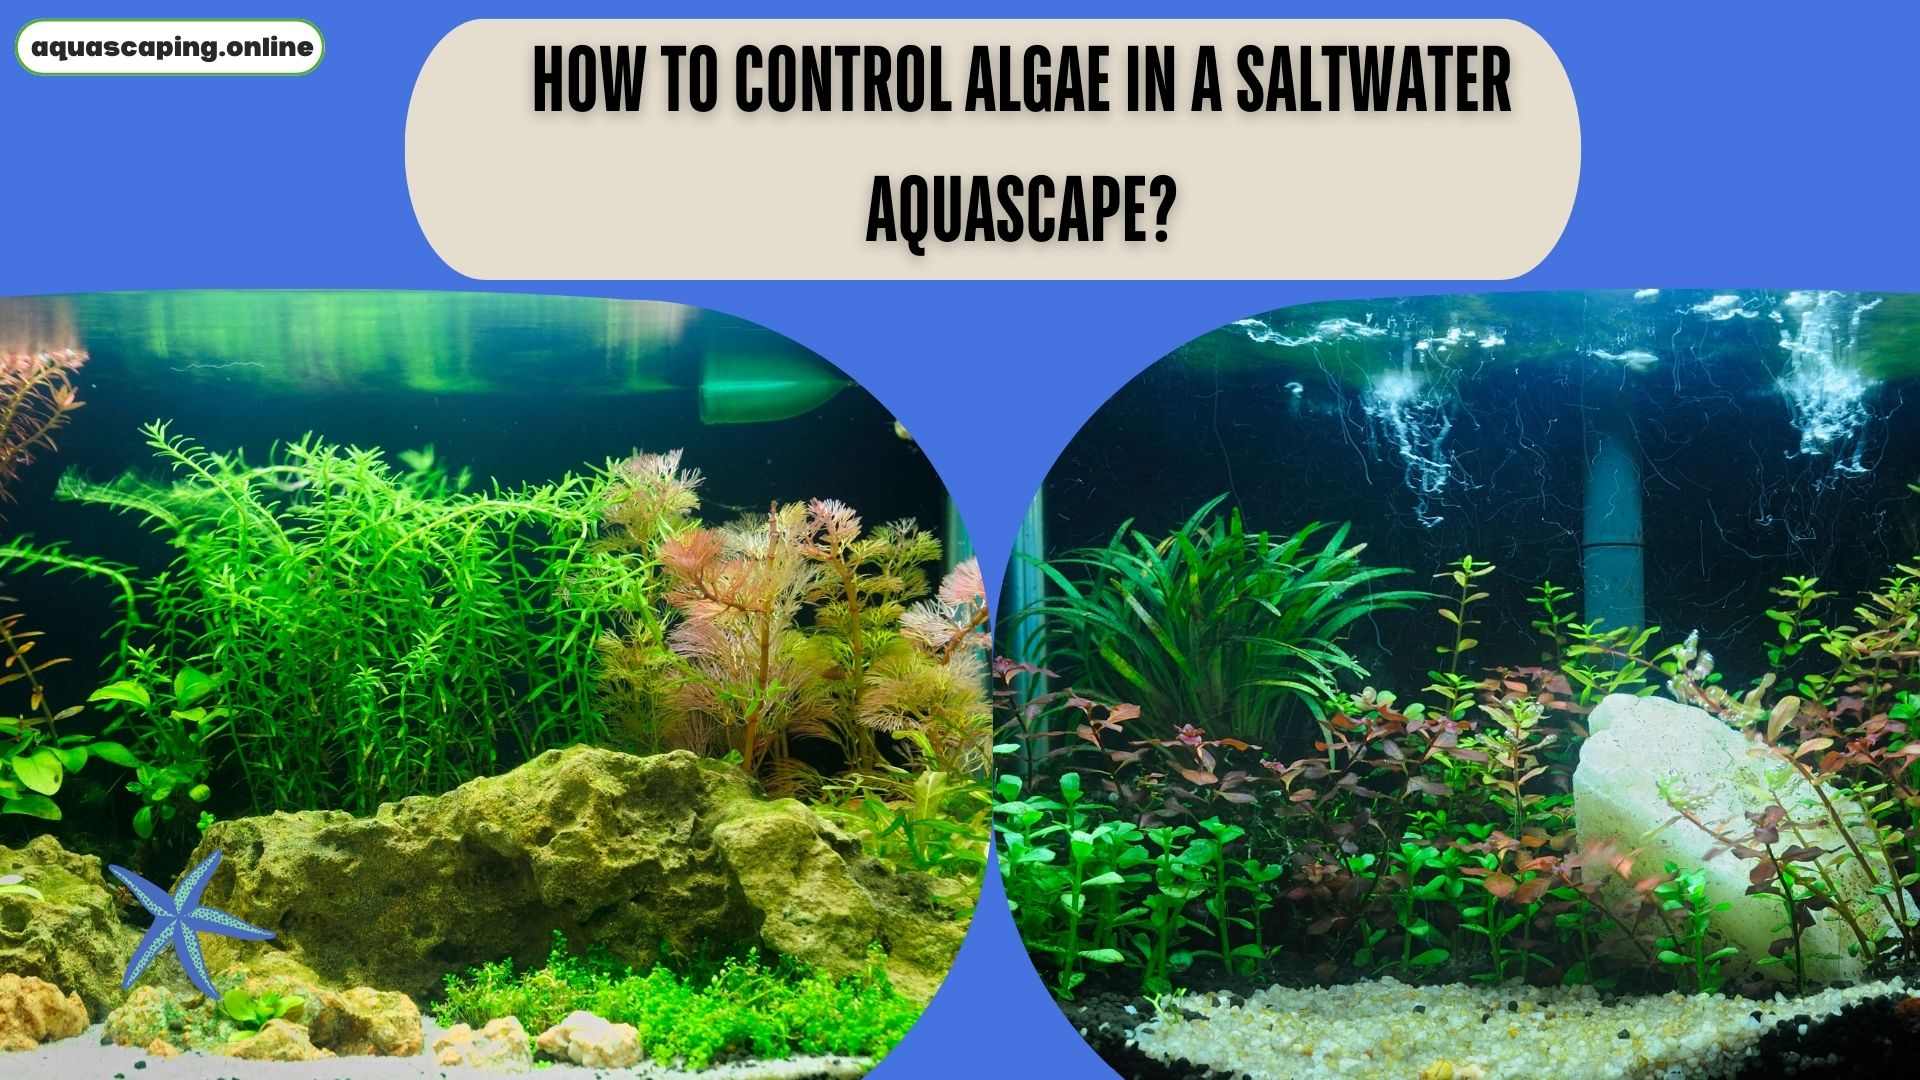 Algae in a saltwater aquascape